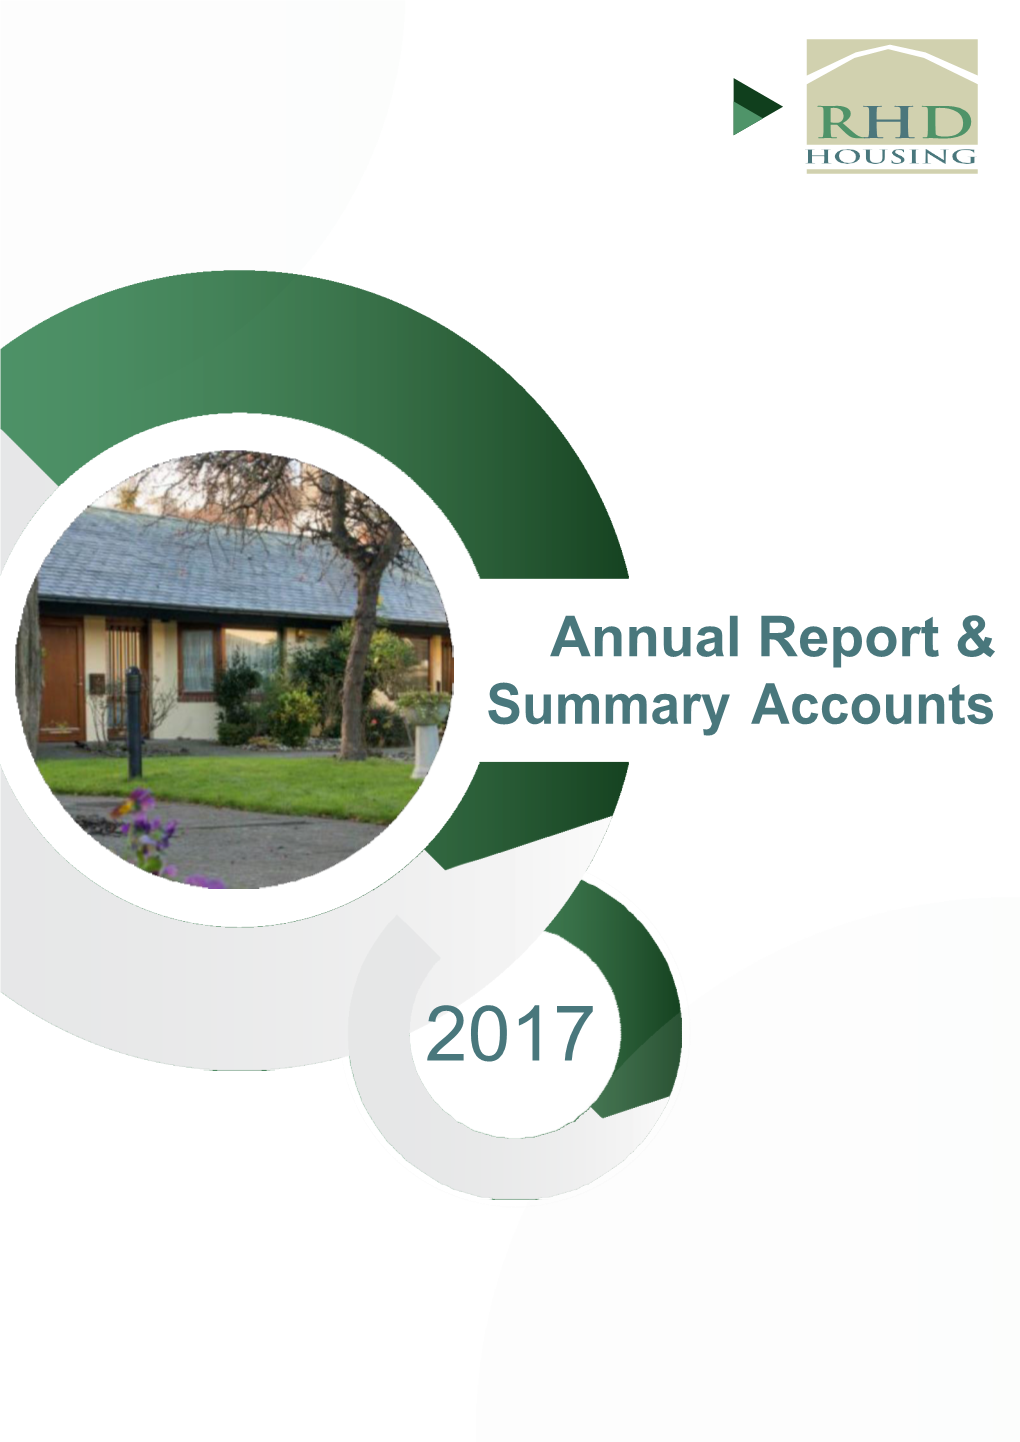 Annual Report & Summary Accounts